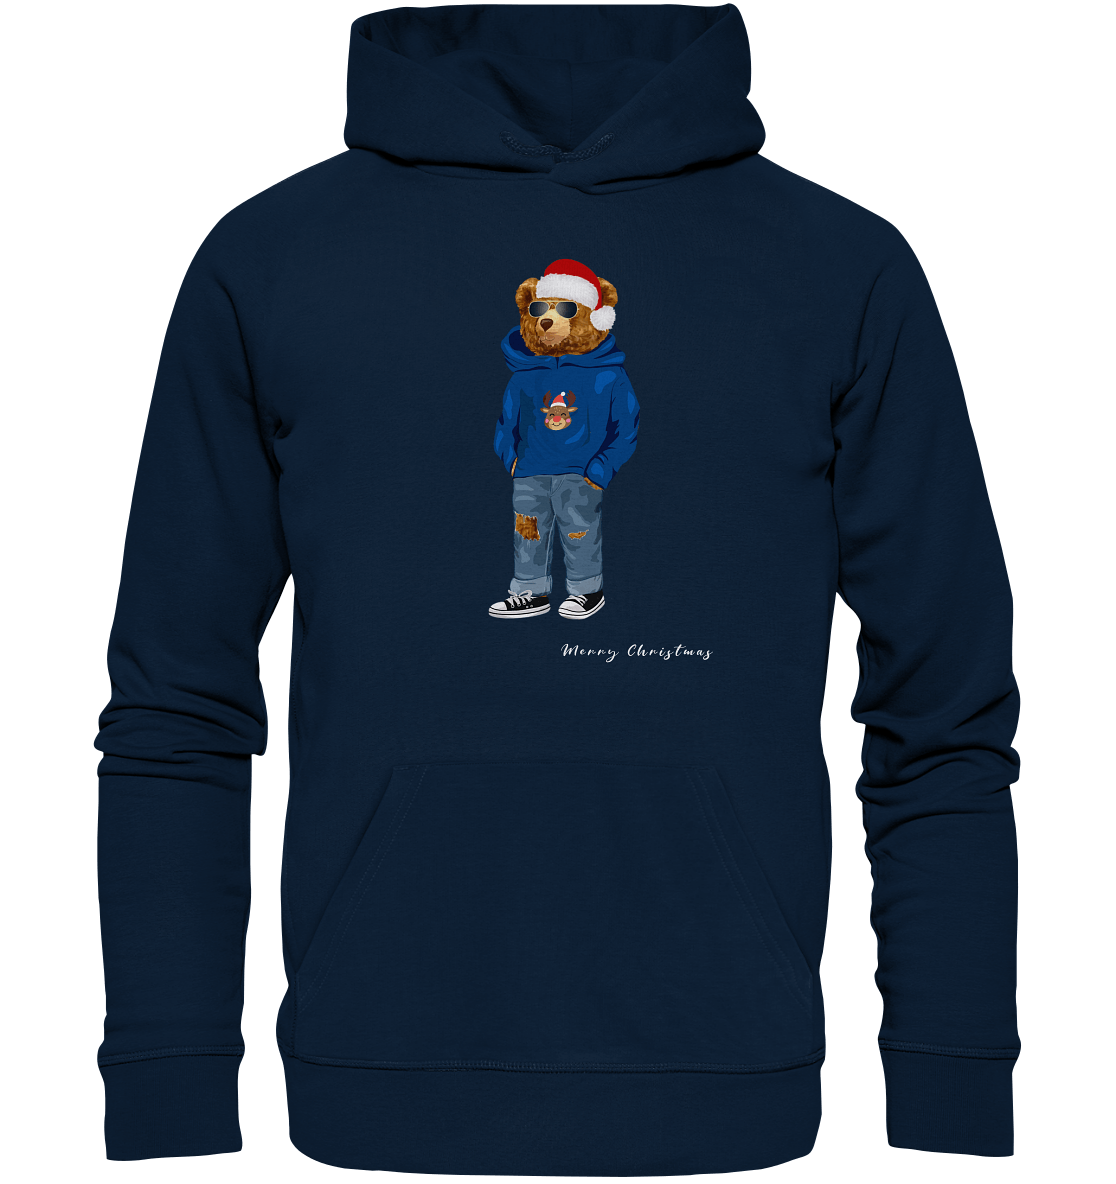 Teddybaer-Pullover-Hoodie-Weihnachtspullover-navy-blau-xmas-pulli